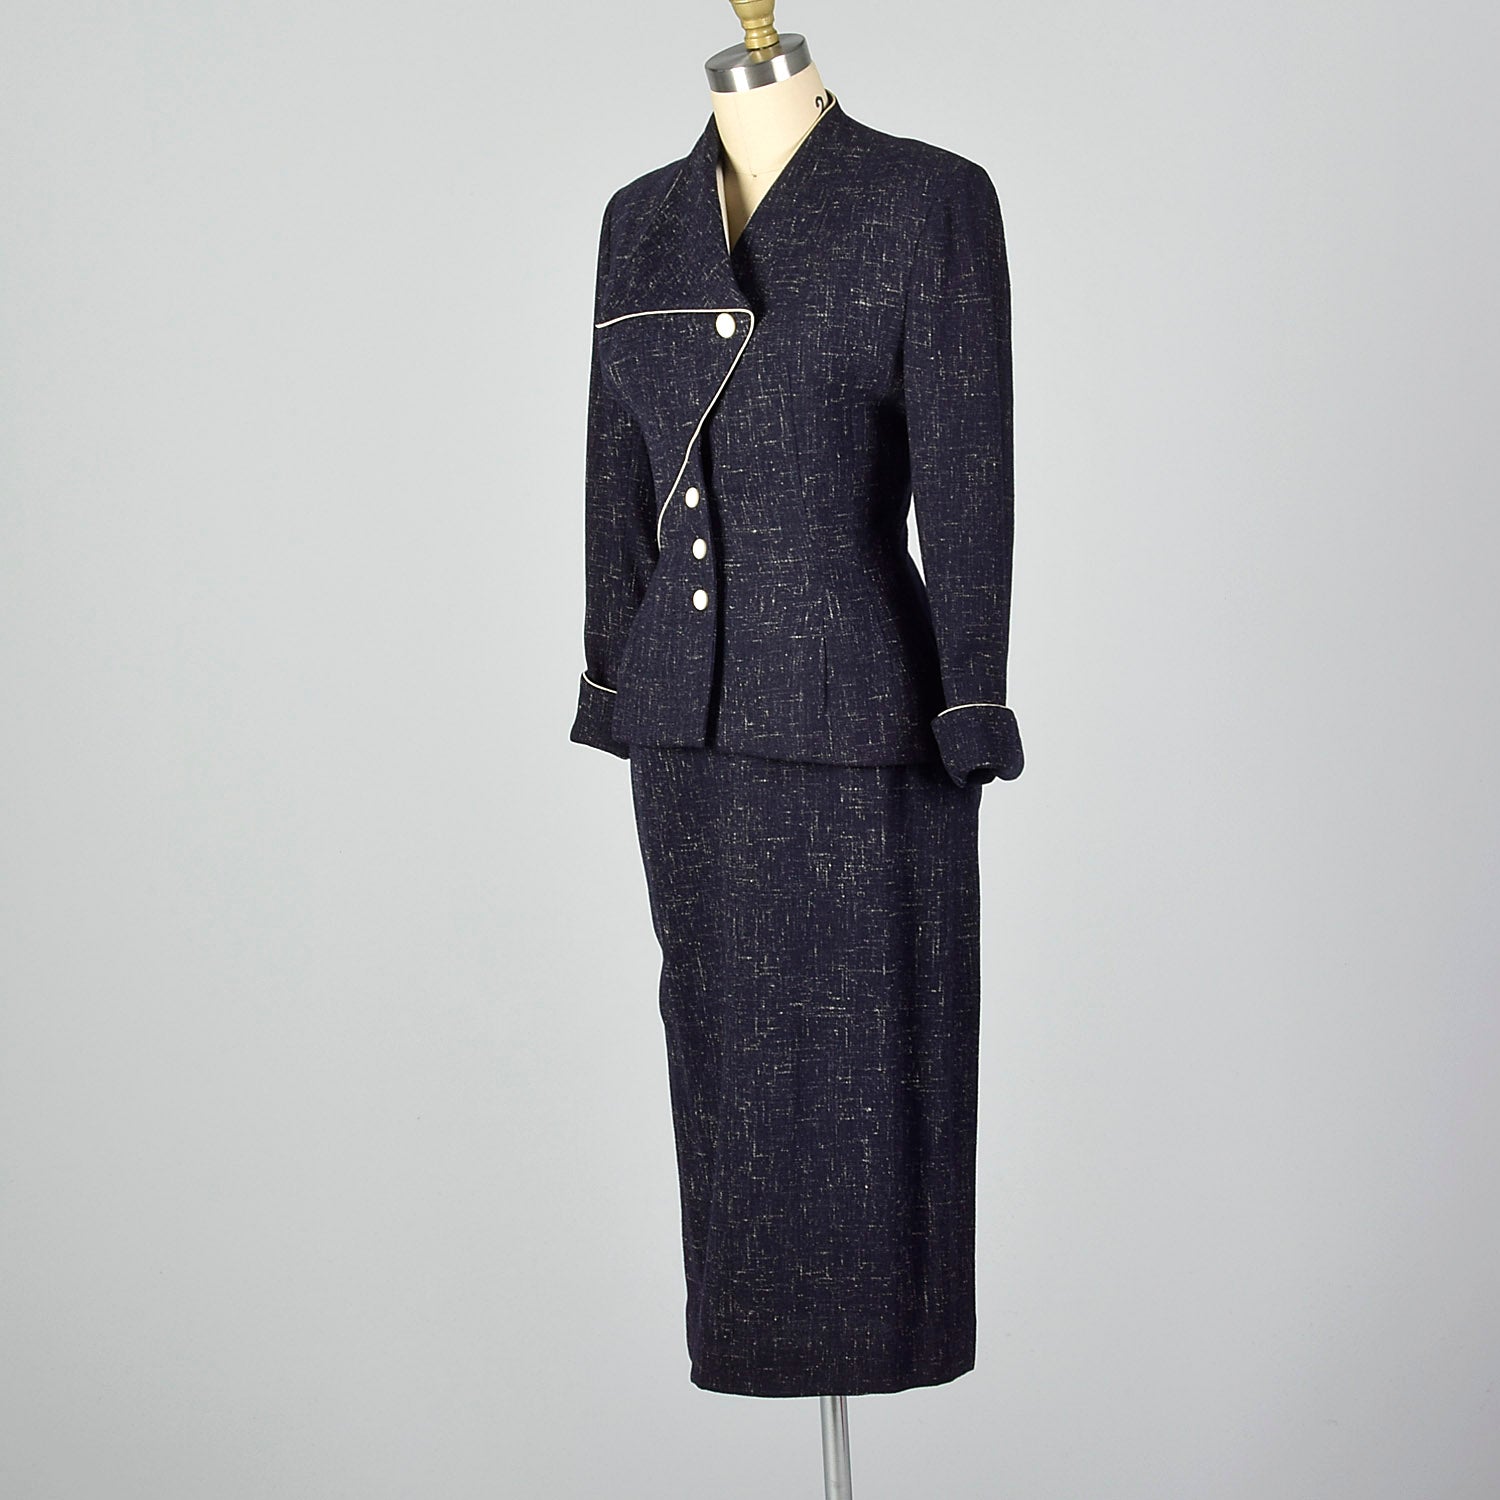 Small Lilli Ann 1950s Skirt Suit in Atomic Fleck